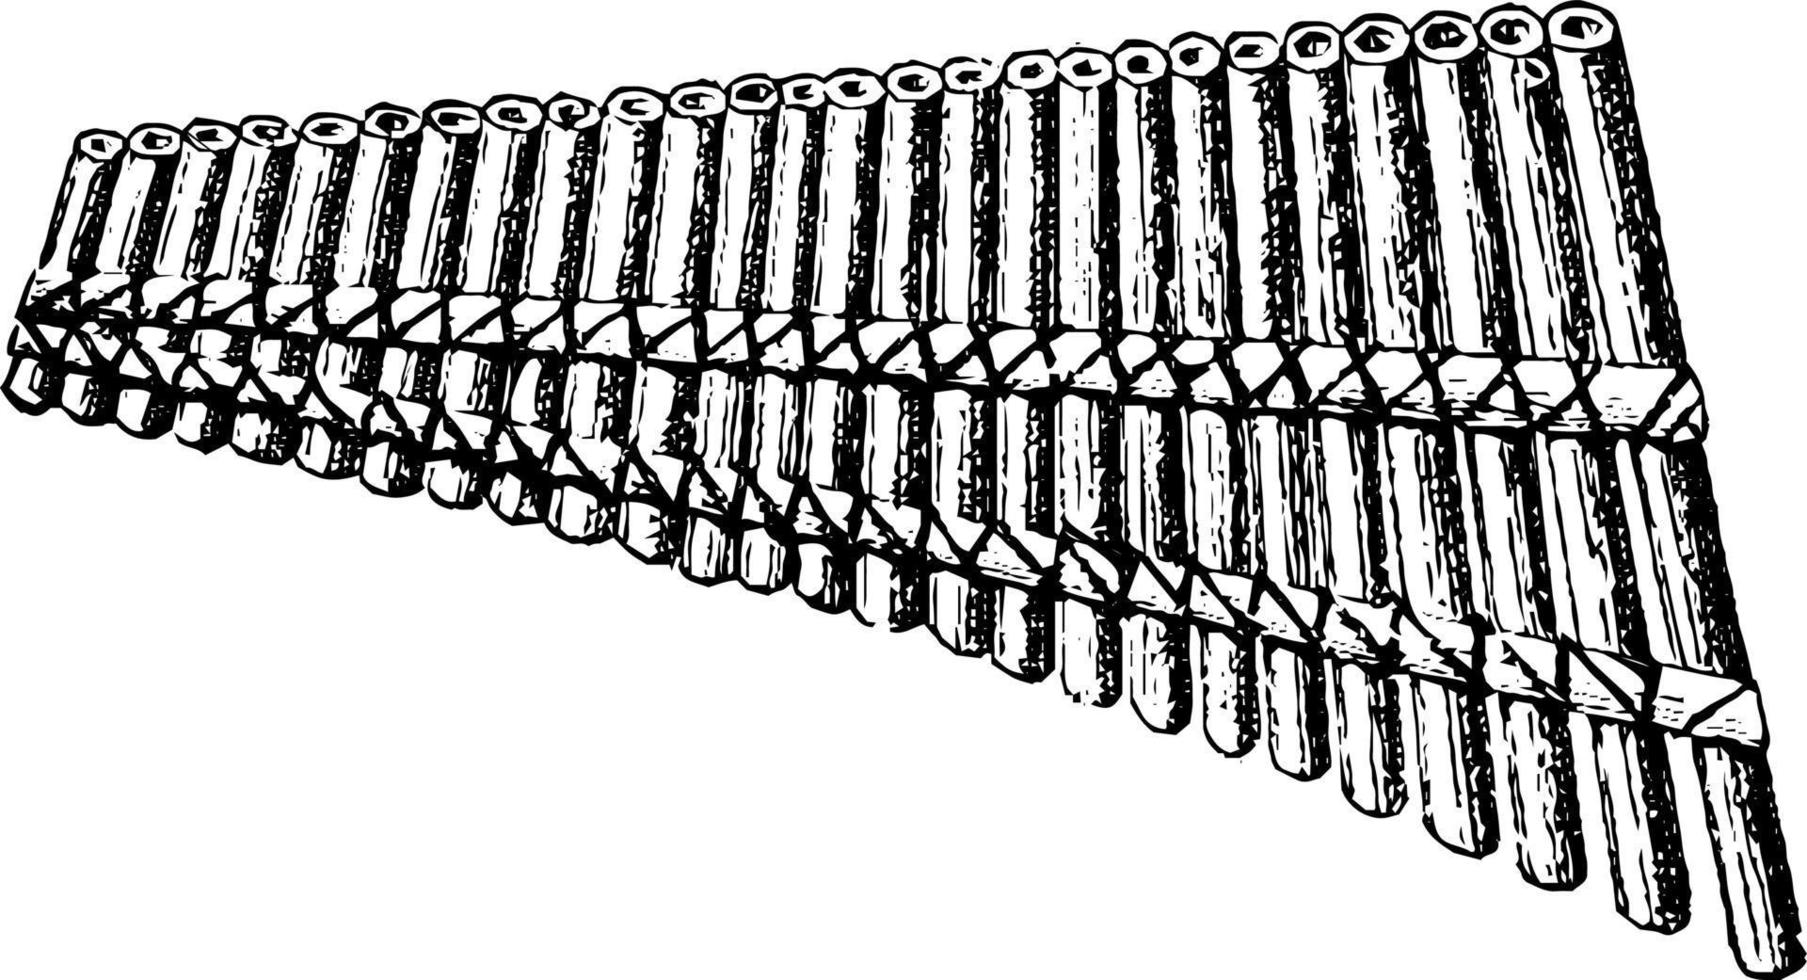 Pan's pipes Syrinex, vintage illustration vector